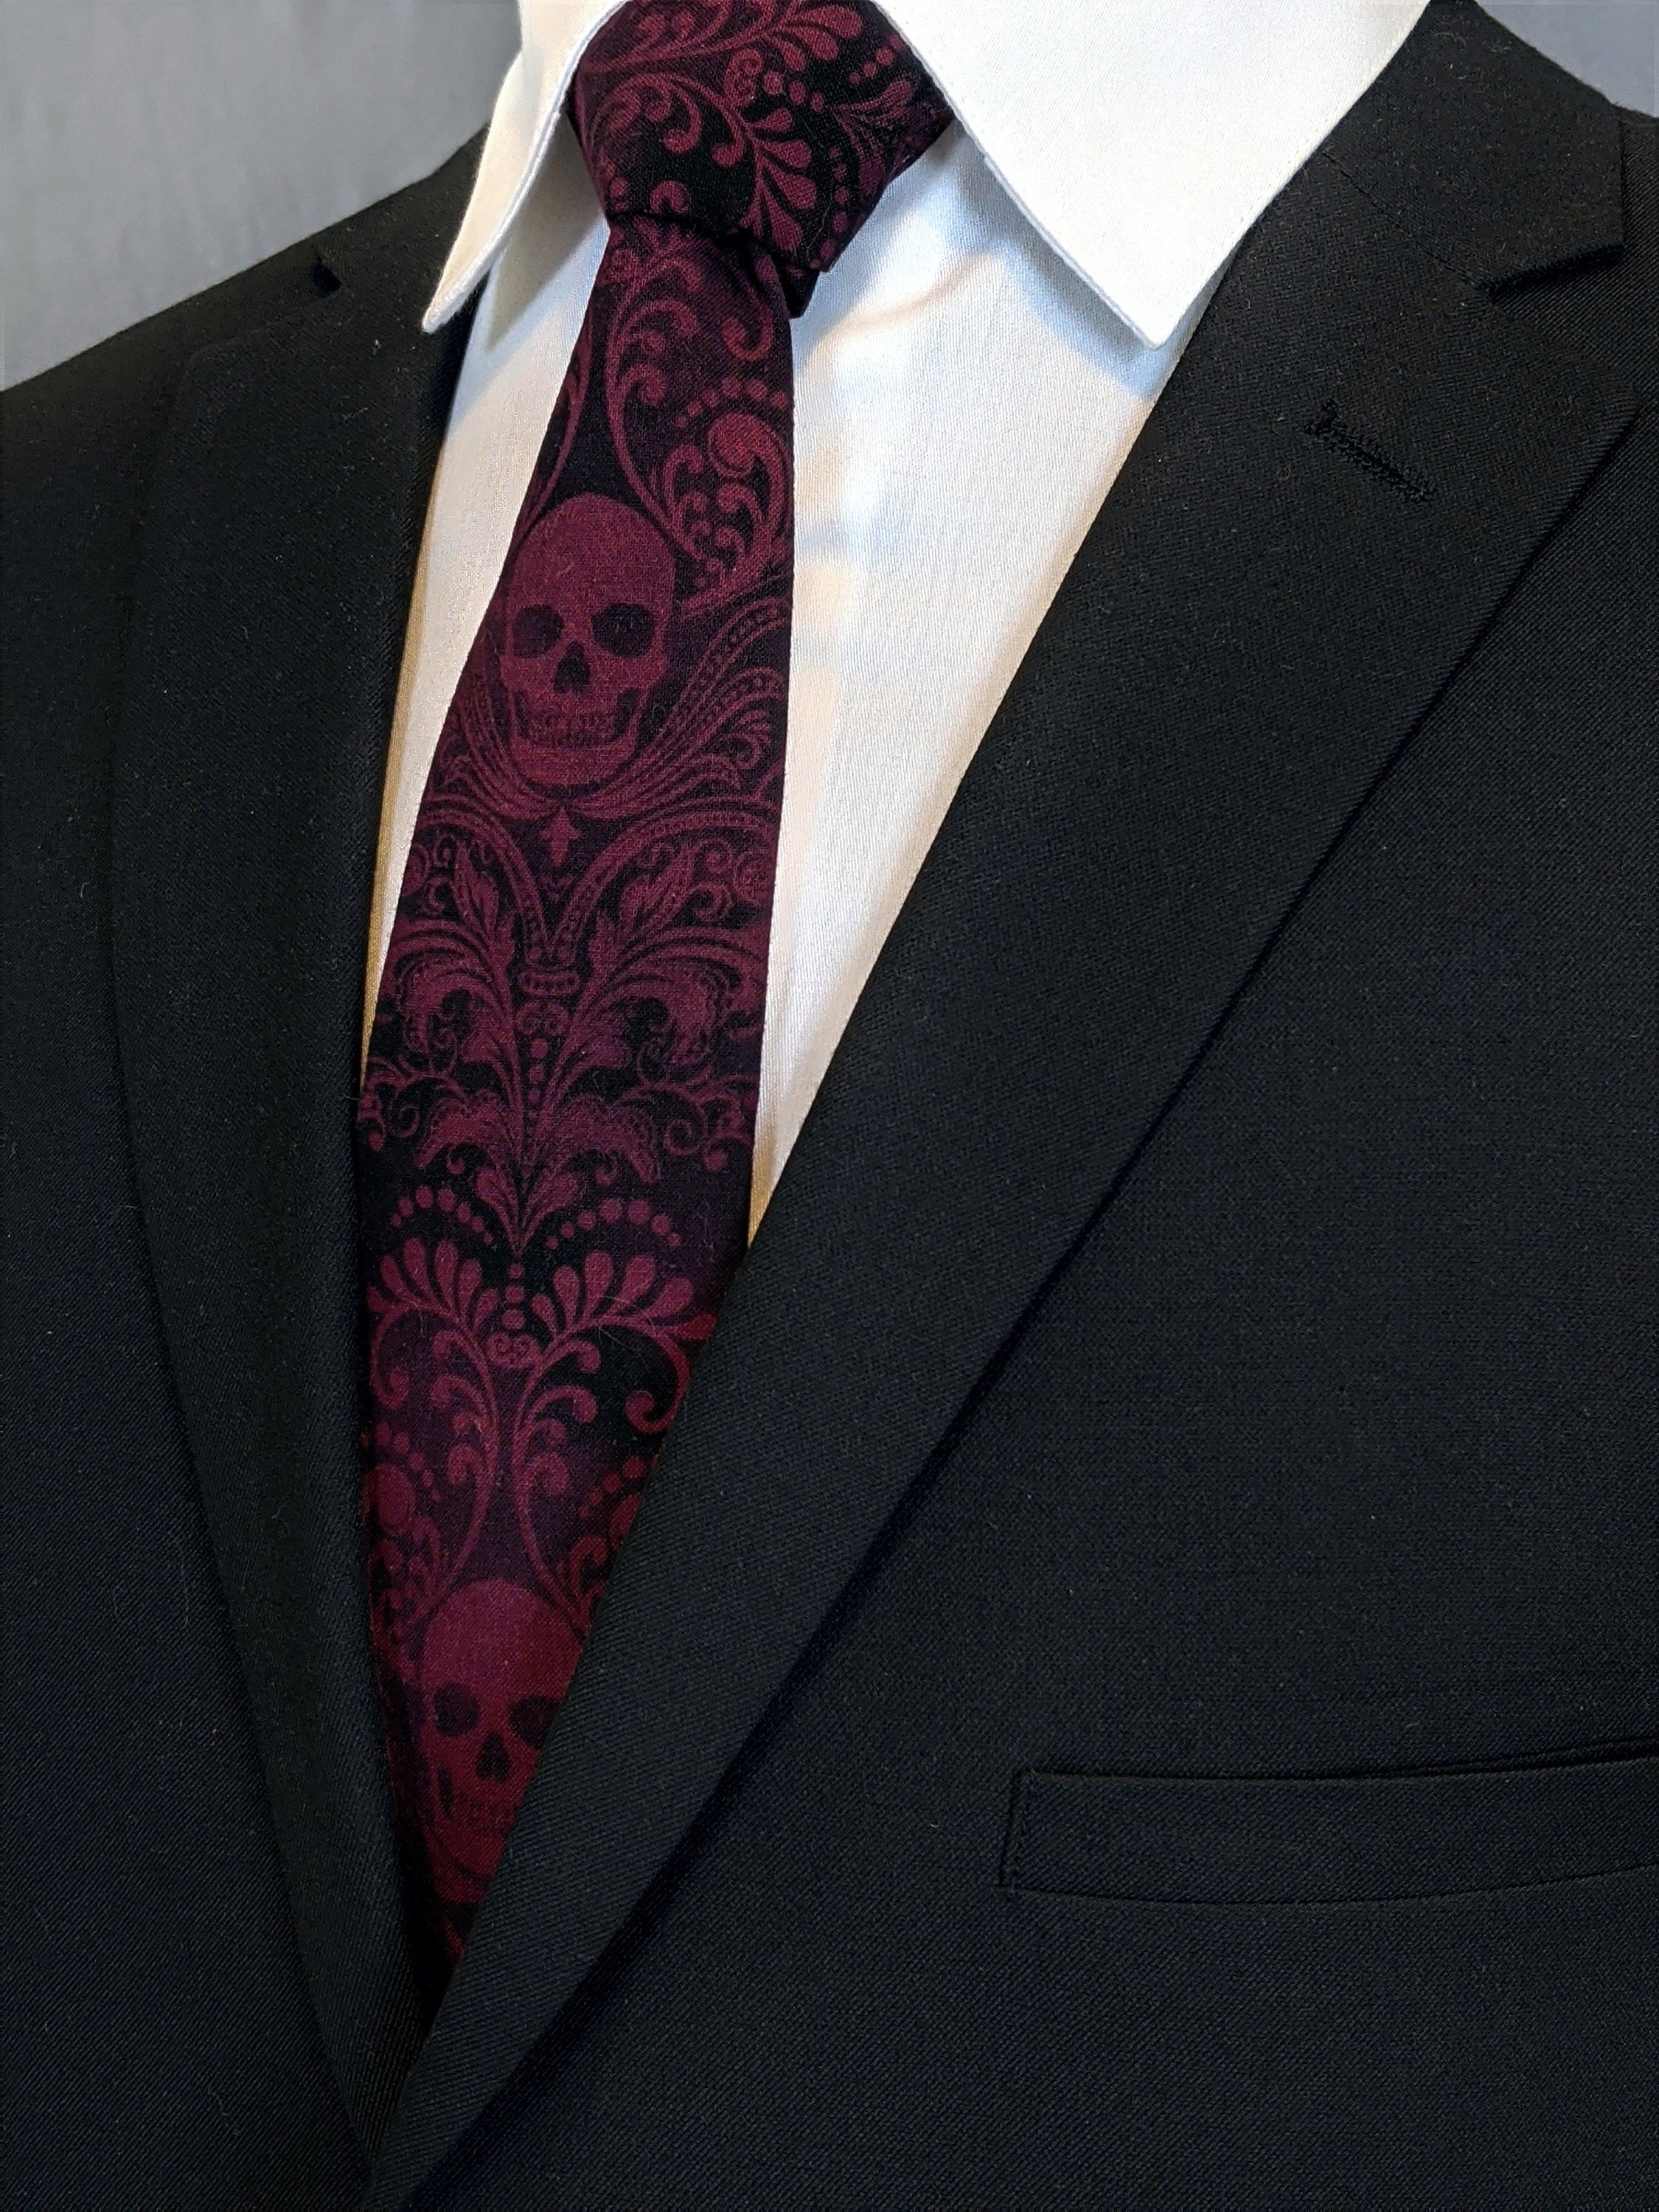 Skull Neck Tie – Wine Red and Black Skull Ties, Please read item ...